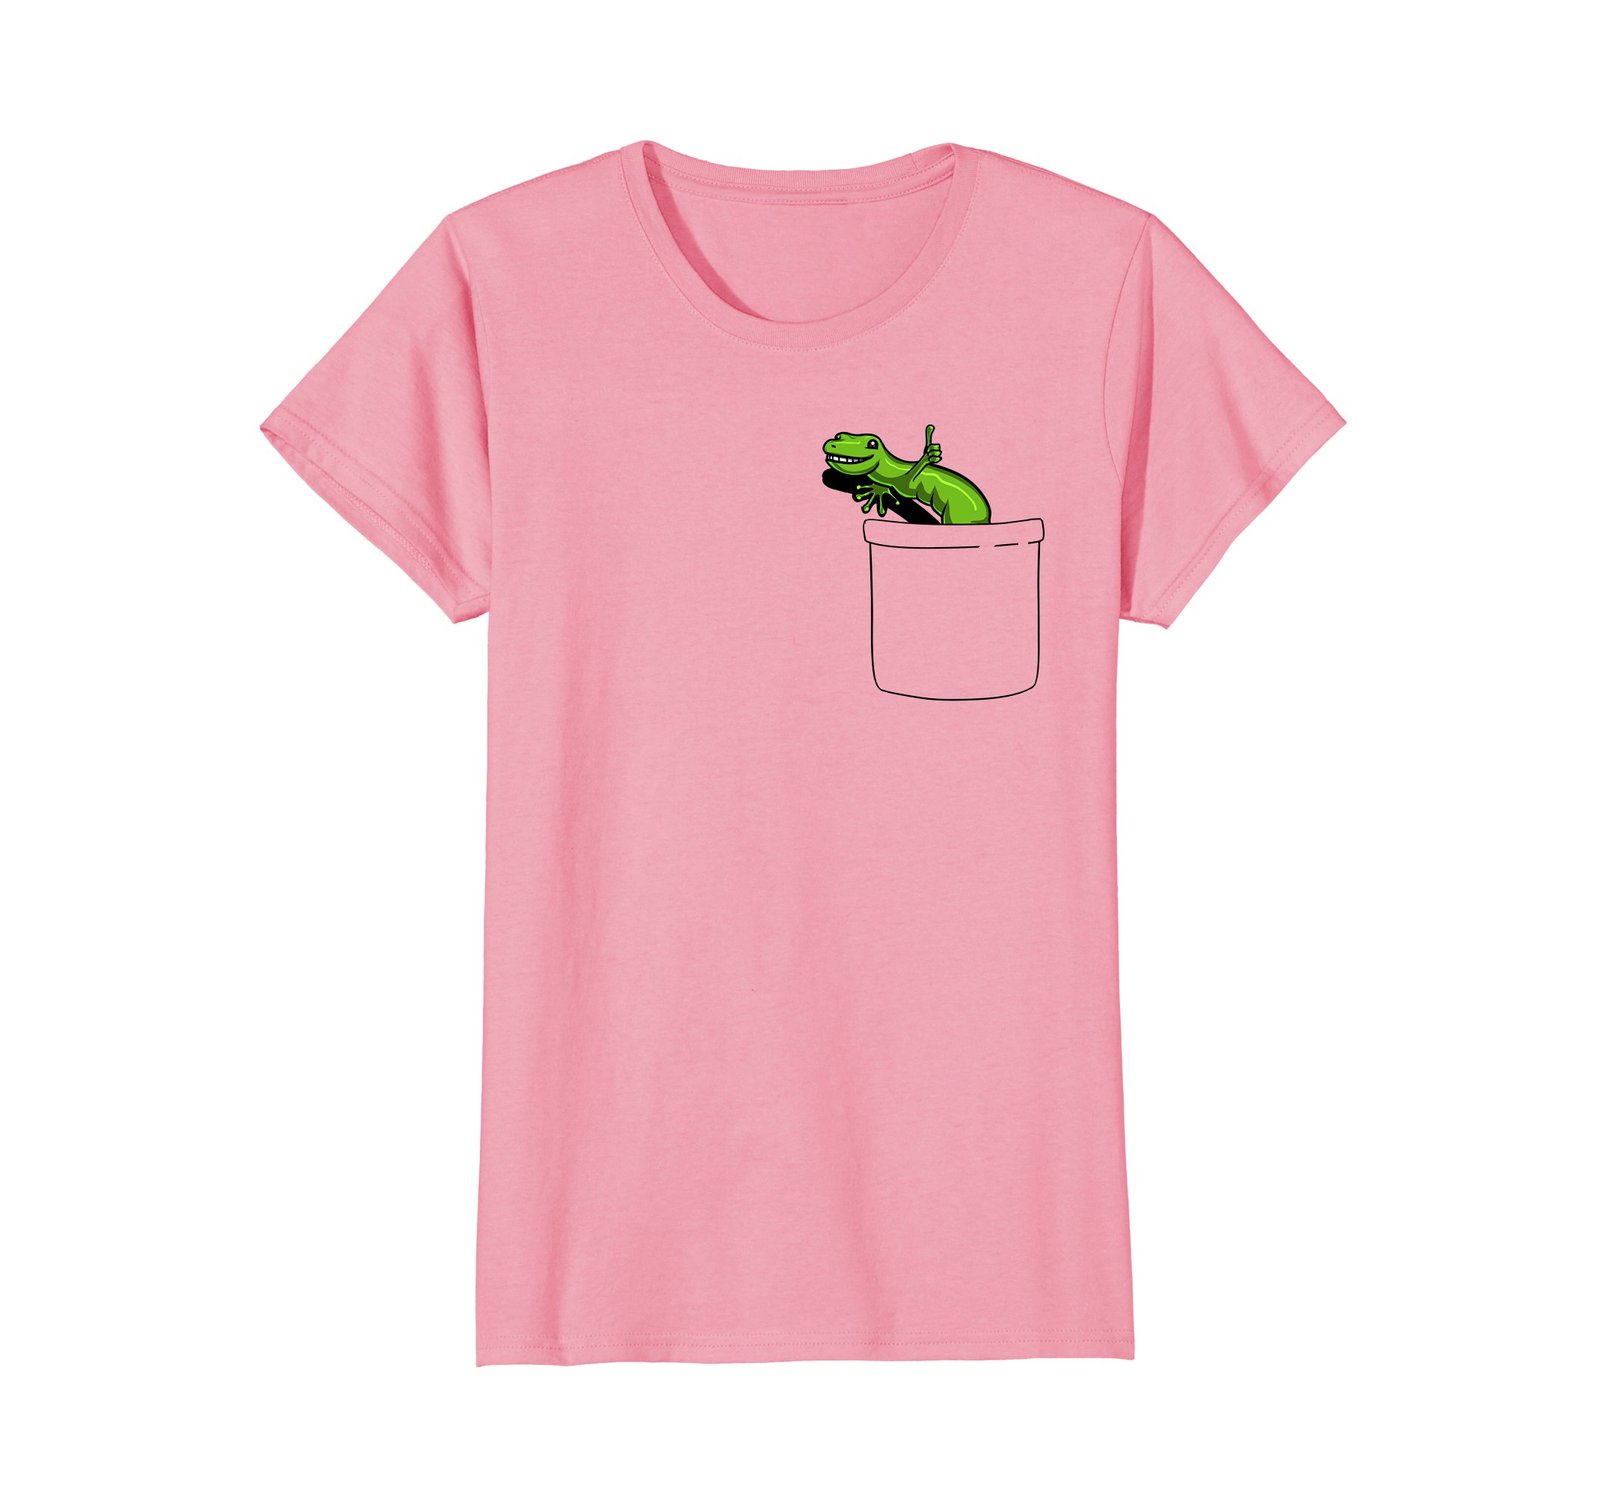 Gecko Shirt For Men And Boys Pocket Lizard Gift - $19.99